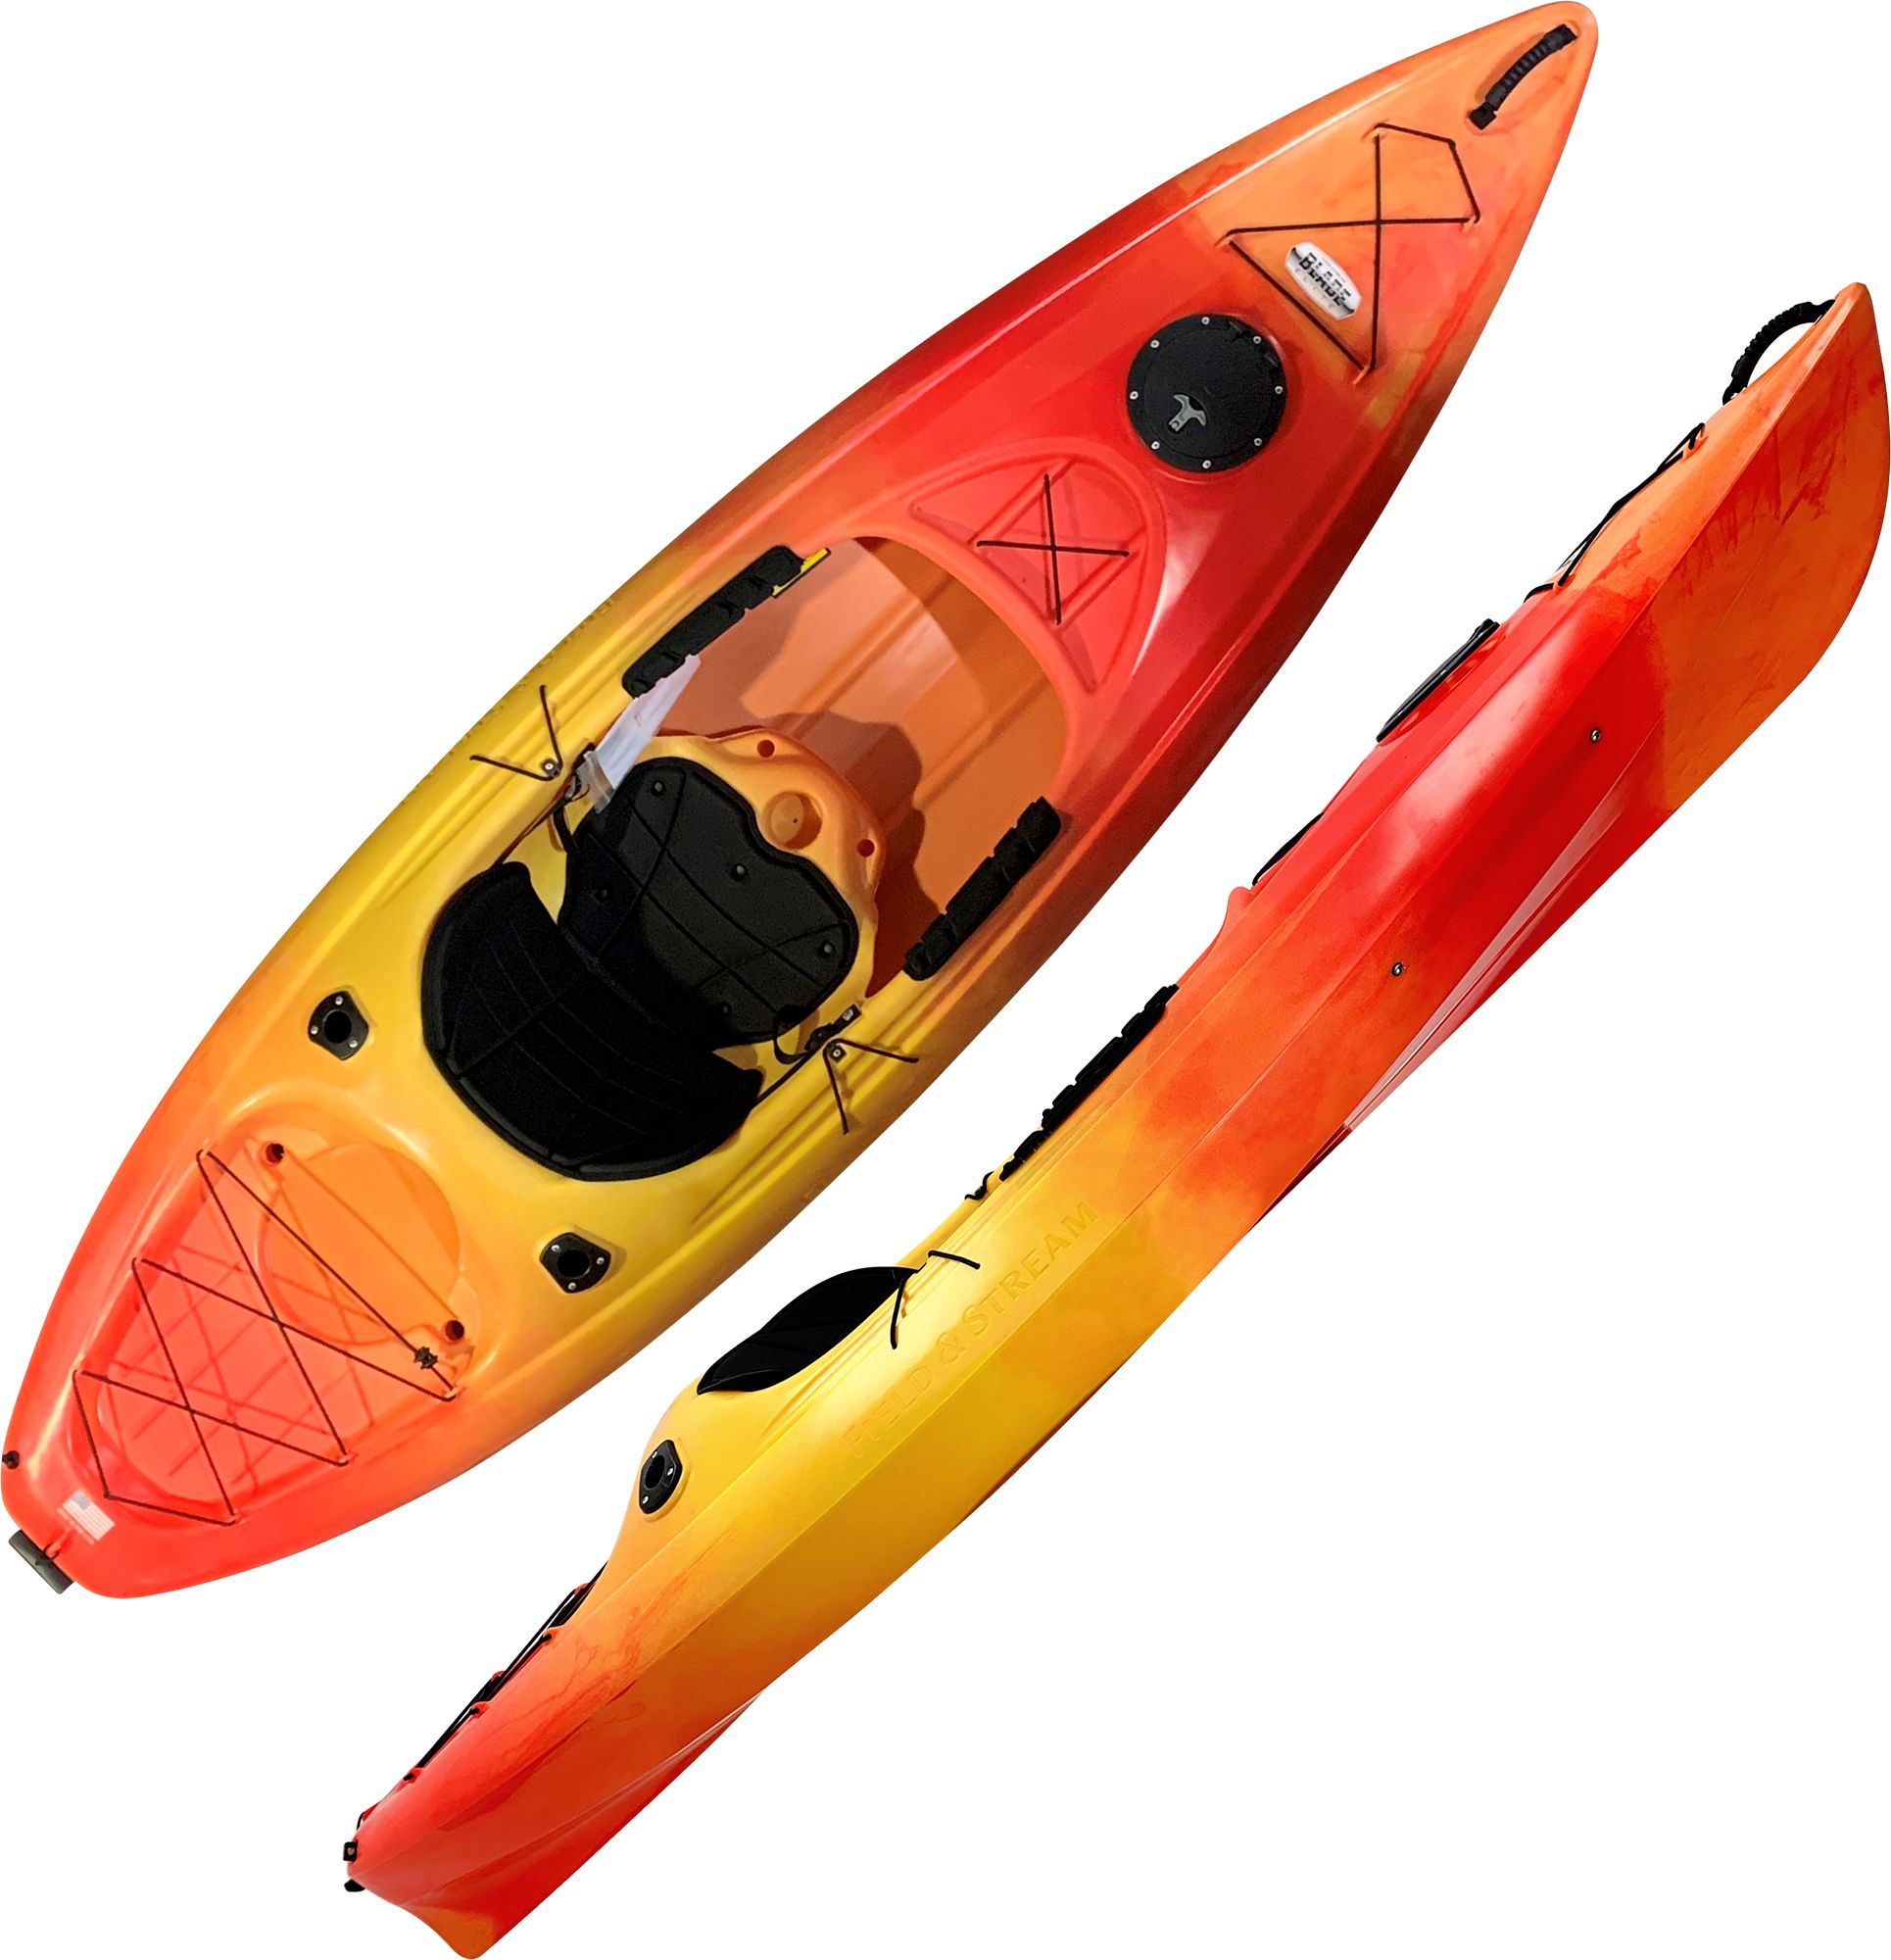 Field & Stream Blade 97 Elite Angler Kayak $99